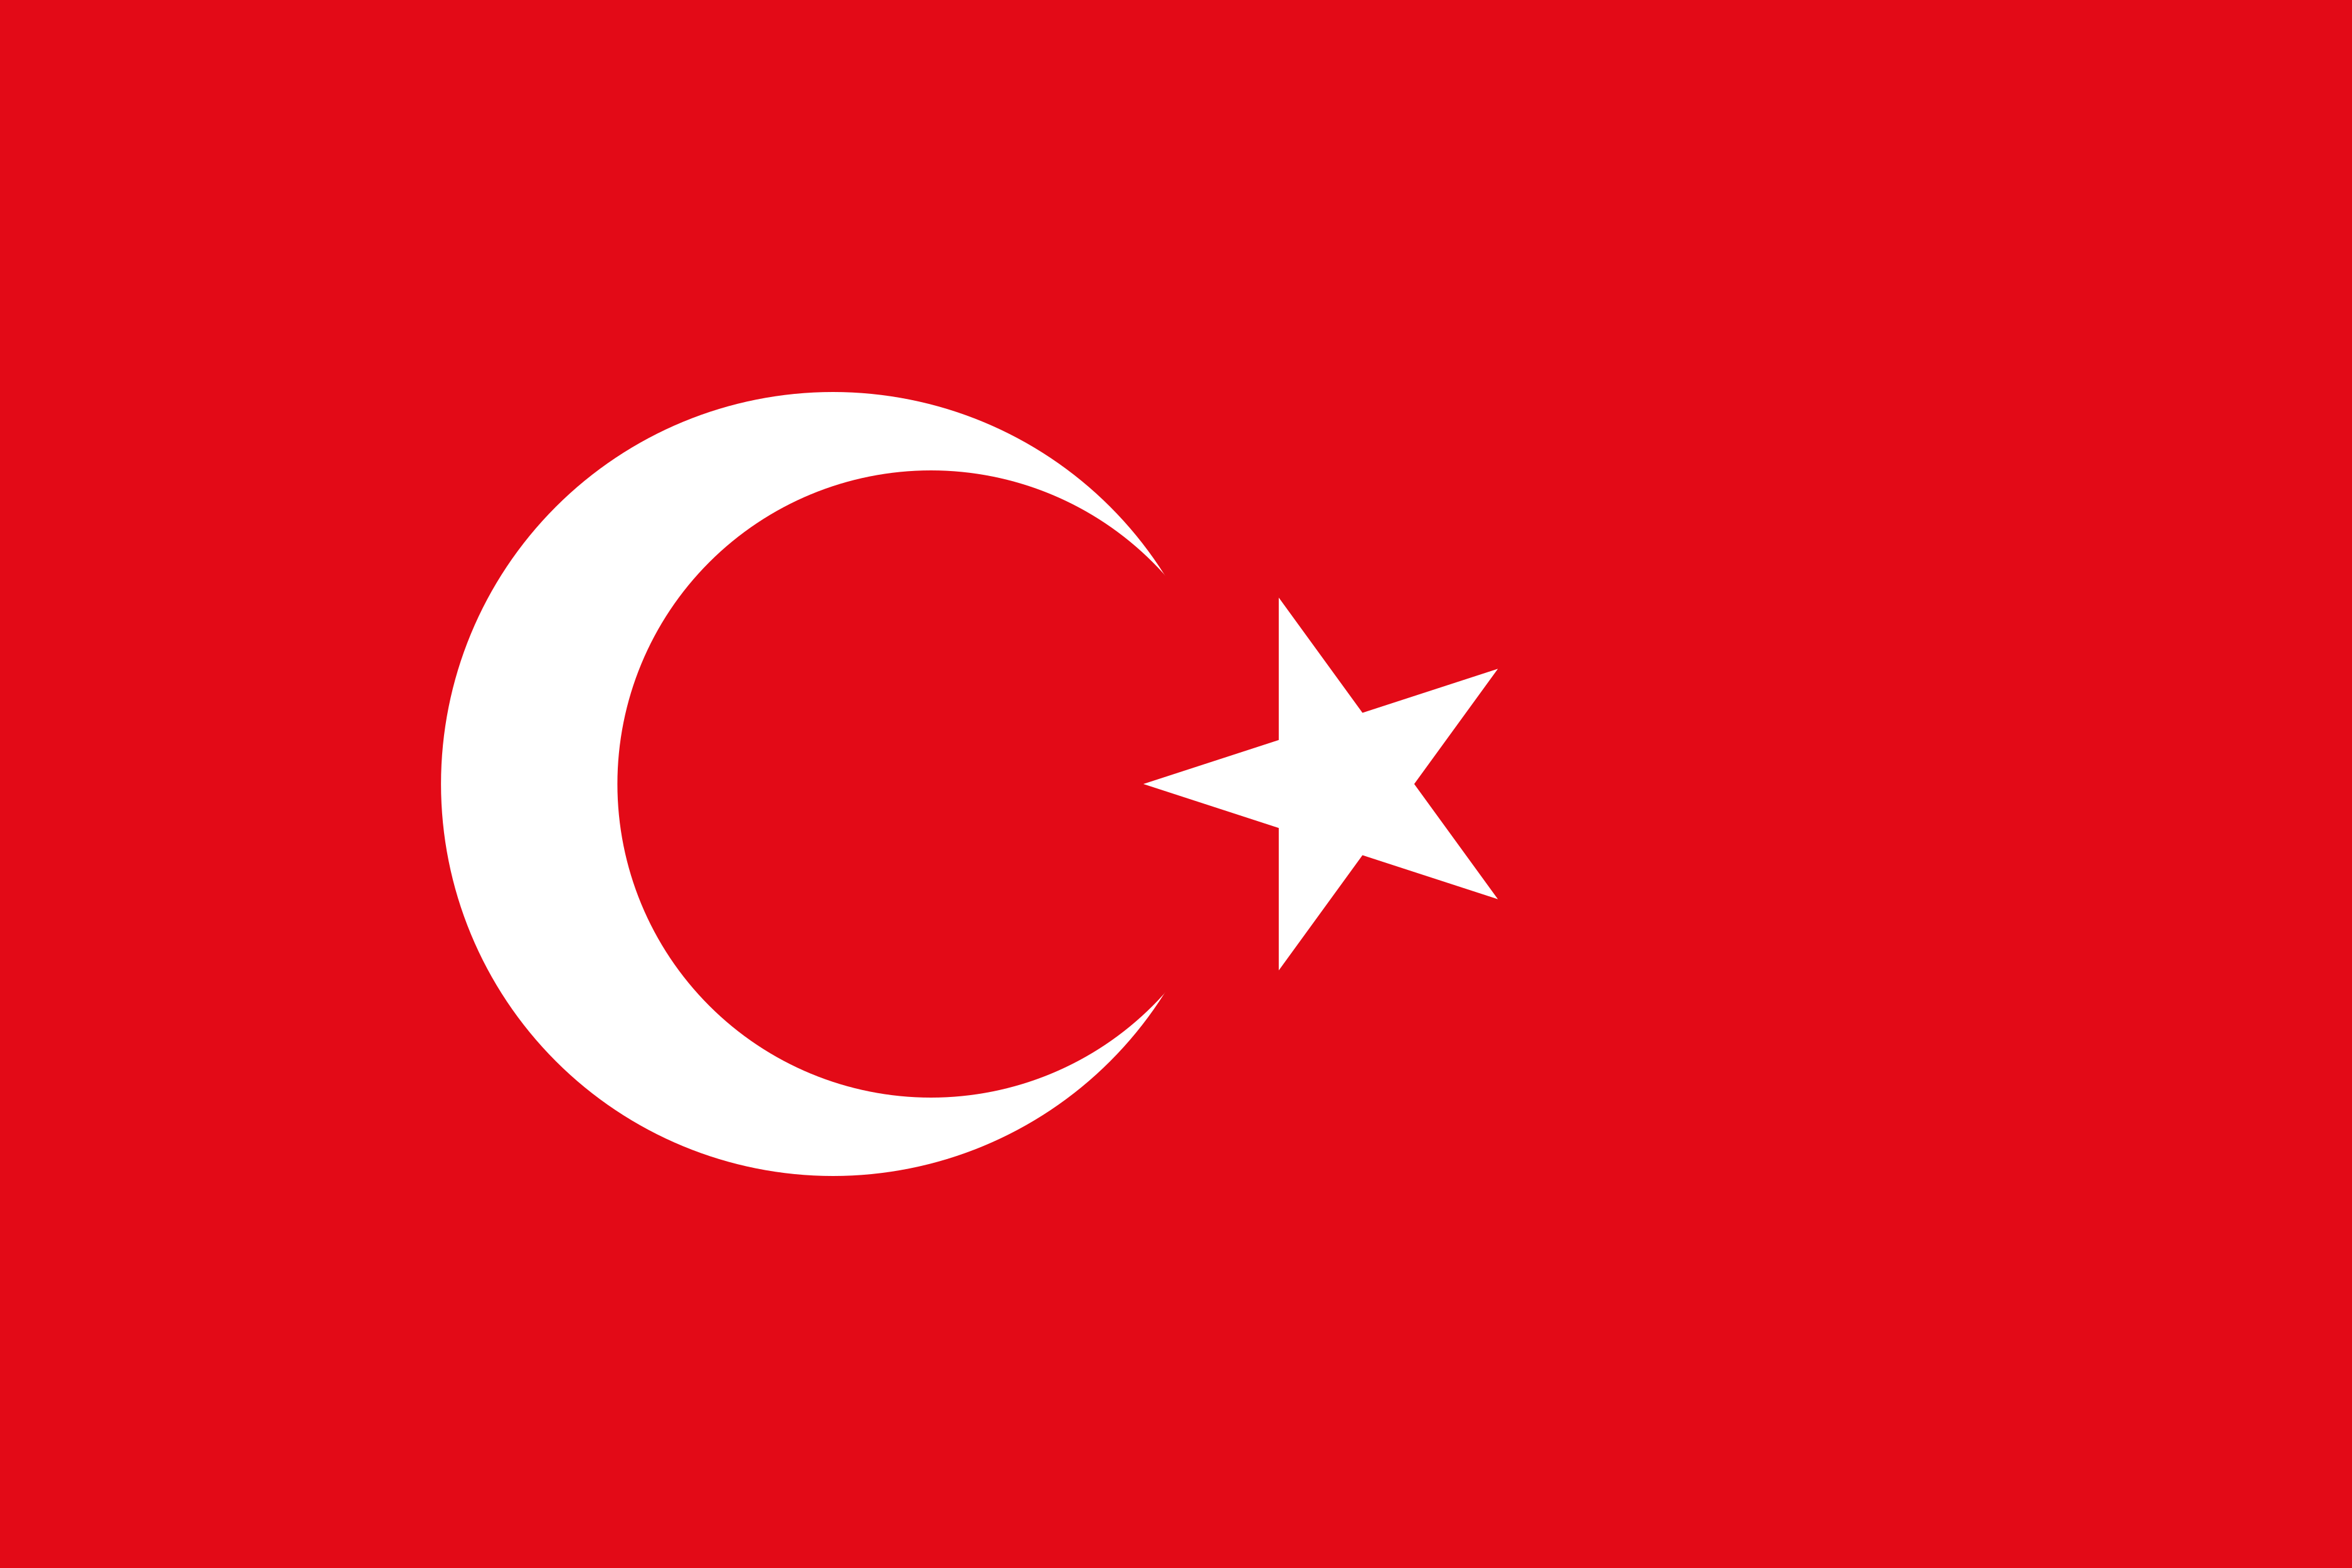 Free Turkey Flag Documents: PDF, DOC, DOCX, HTML & More!